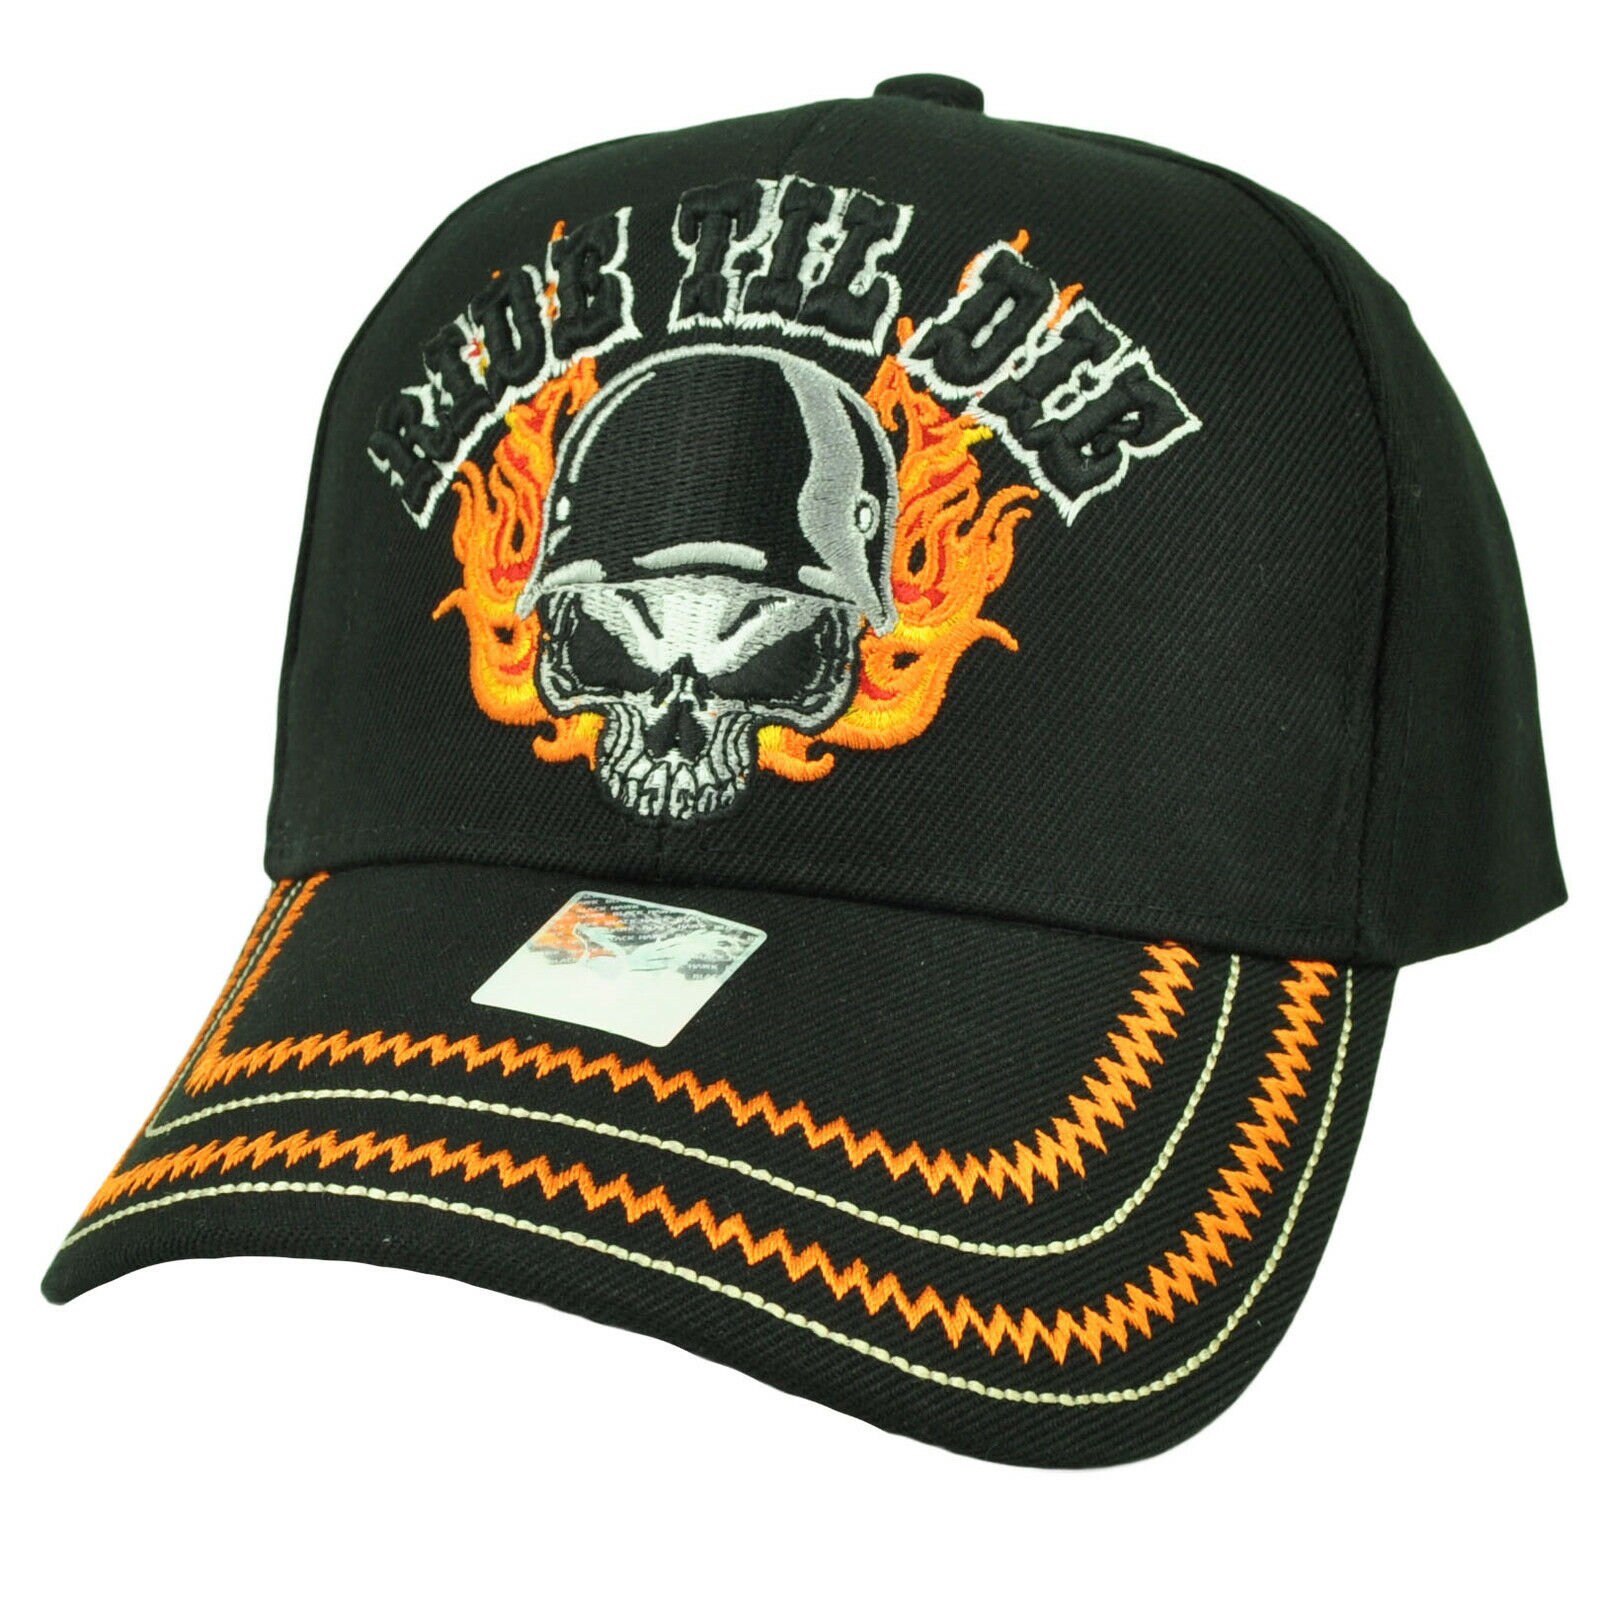 Fire Skull Mesh Caps Adjustable Unisex Snapback Trucker Cap